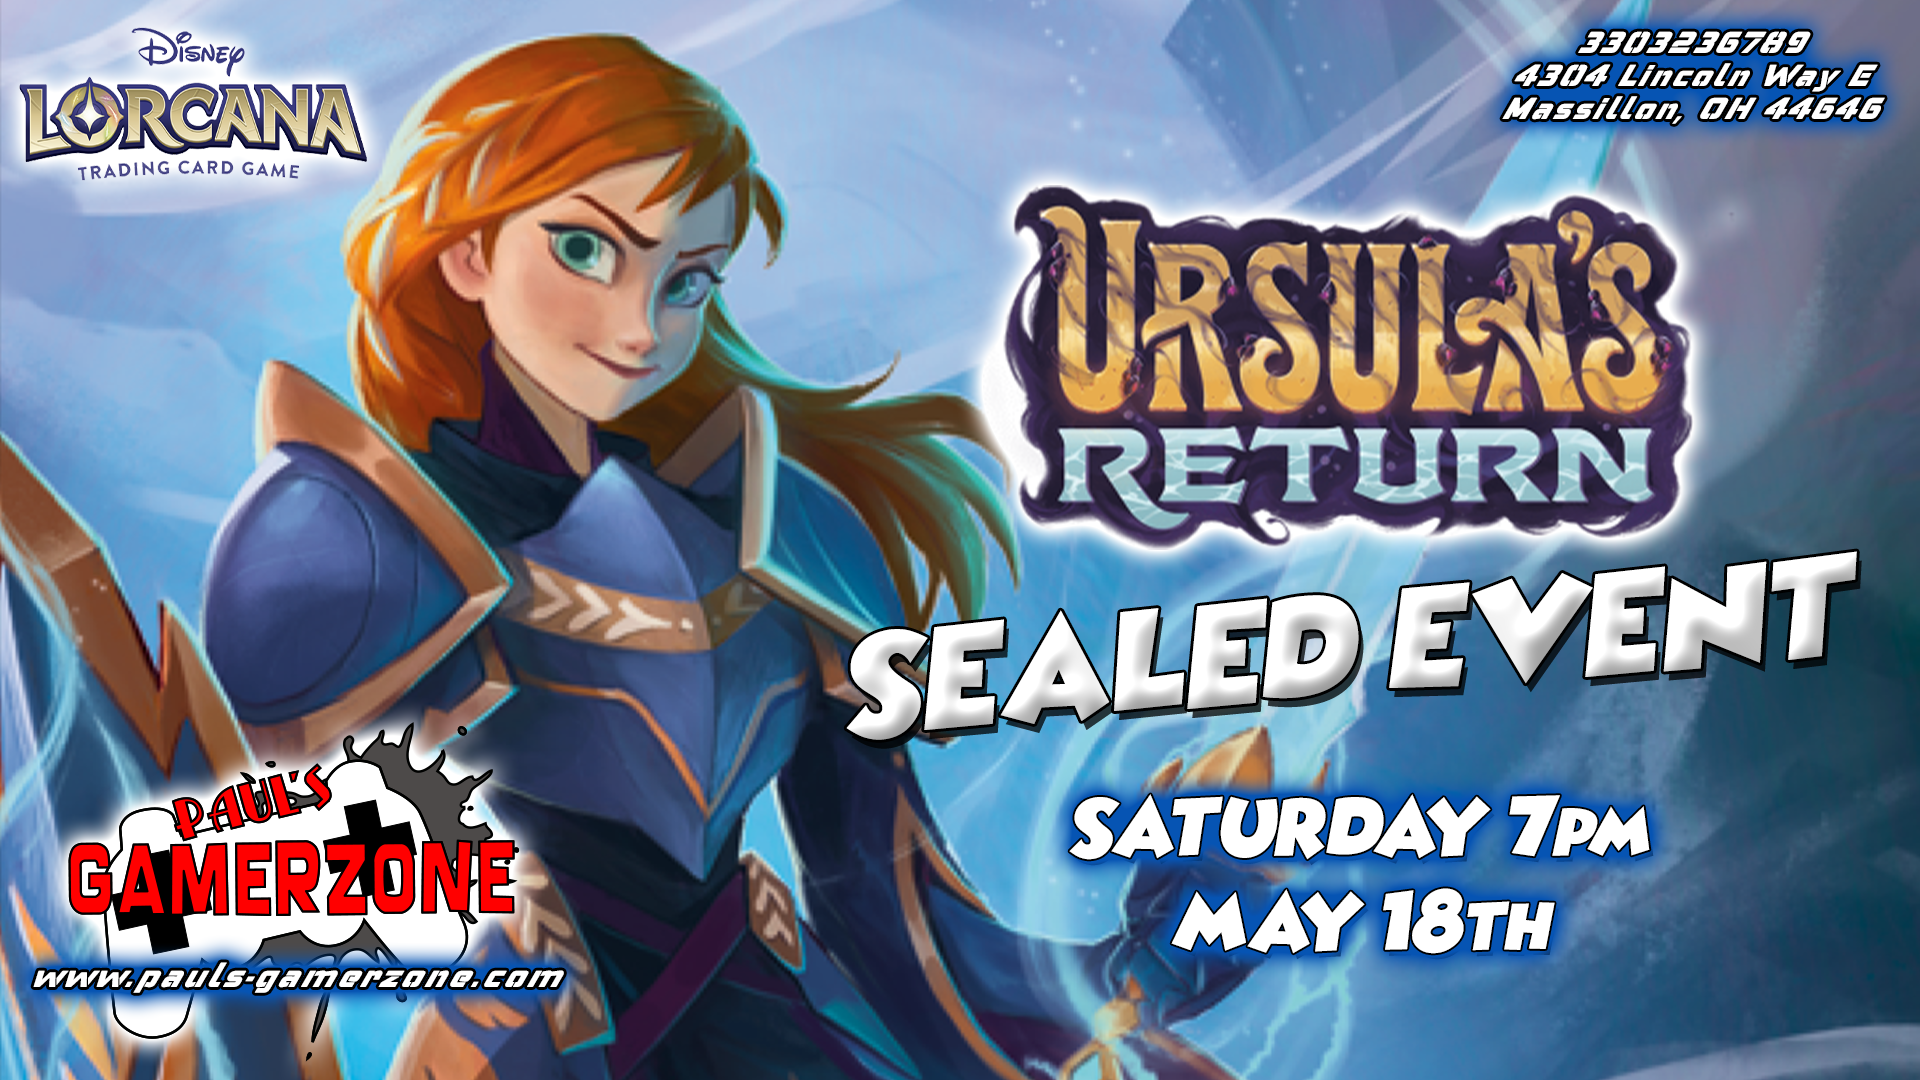 Ursula's Return Sealed Event!